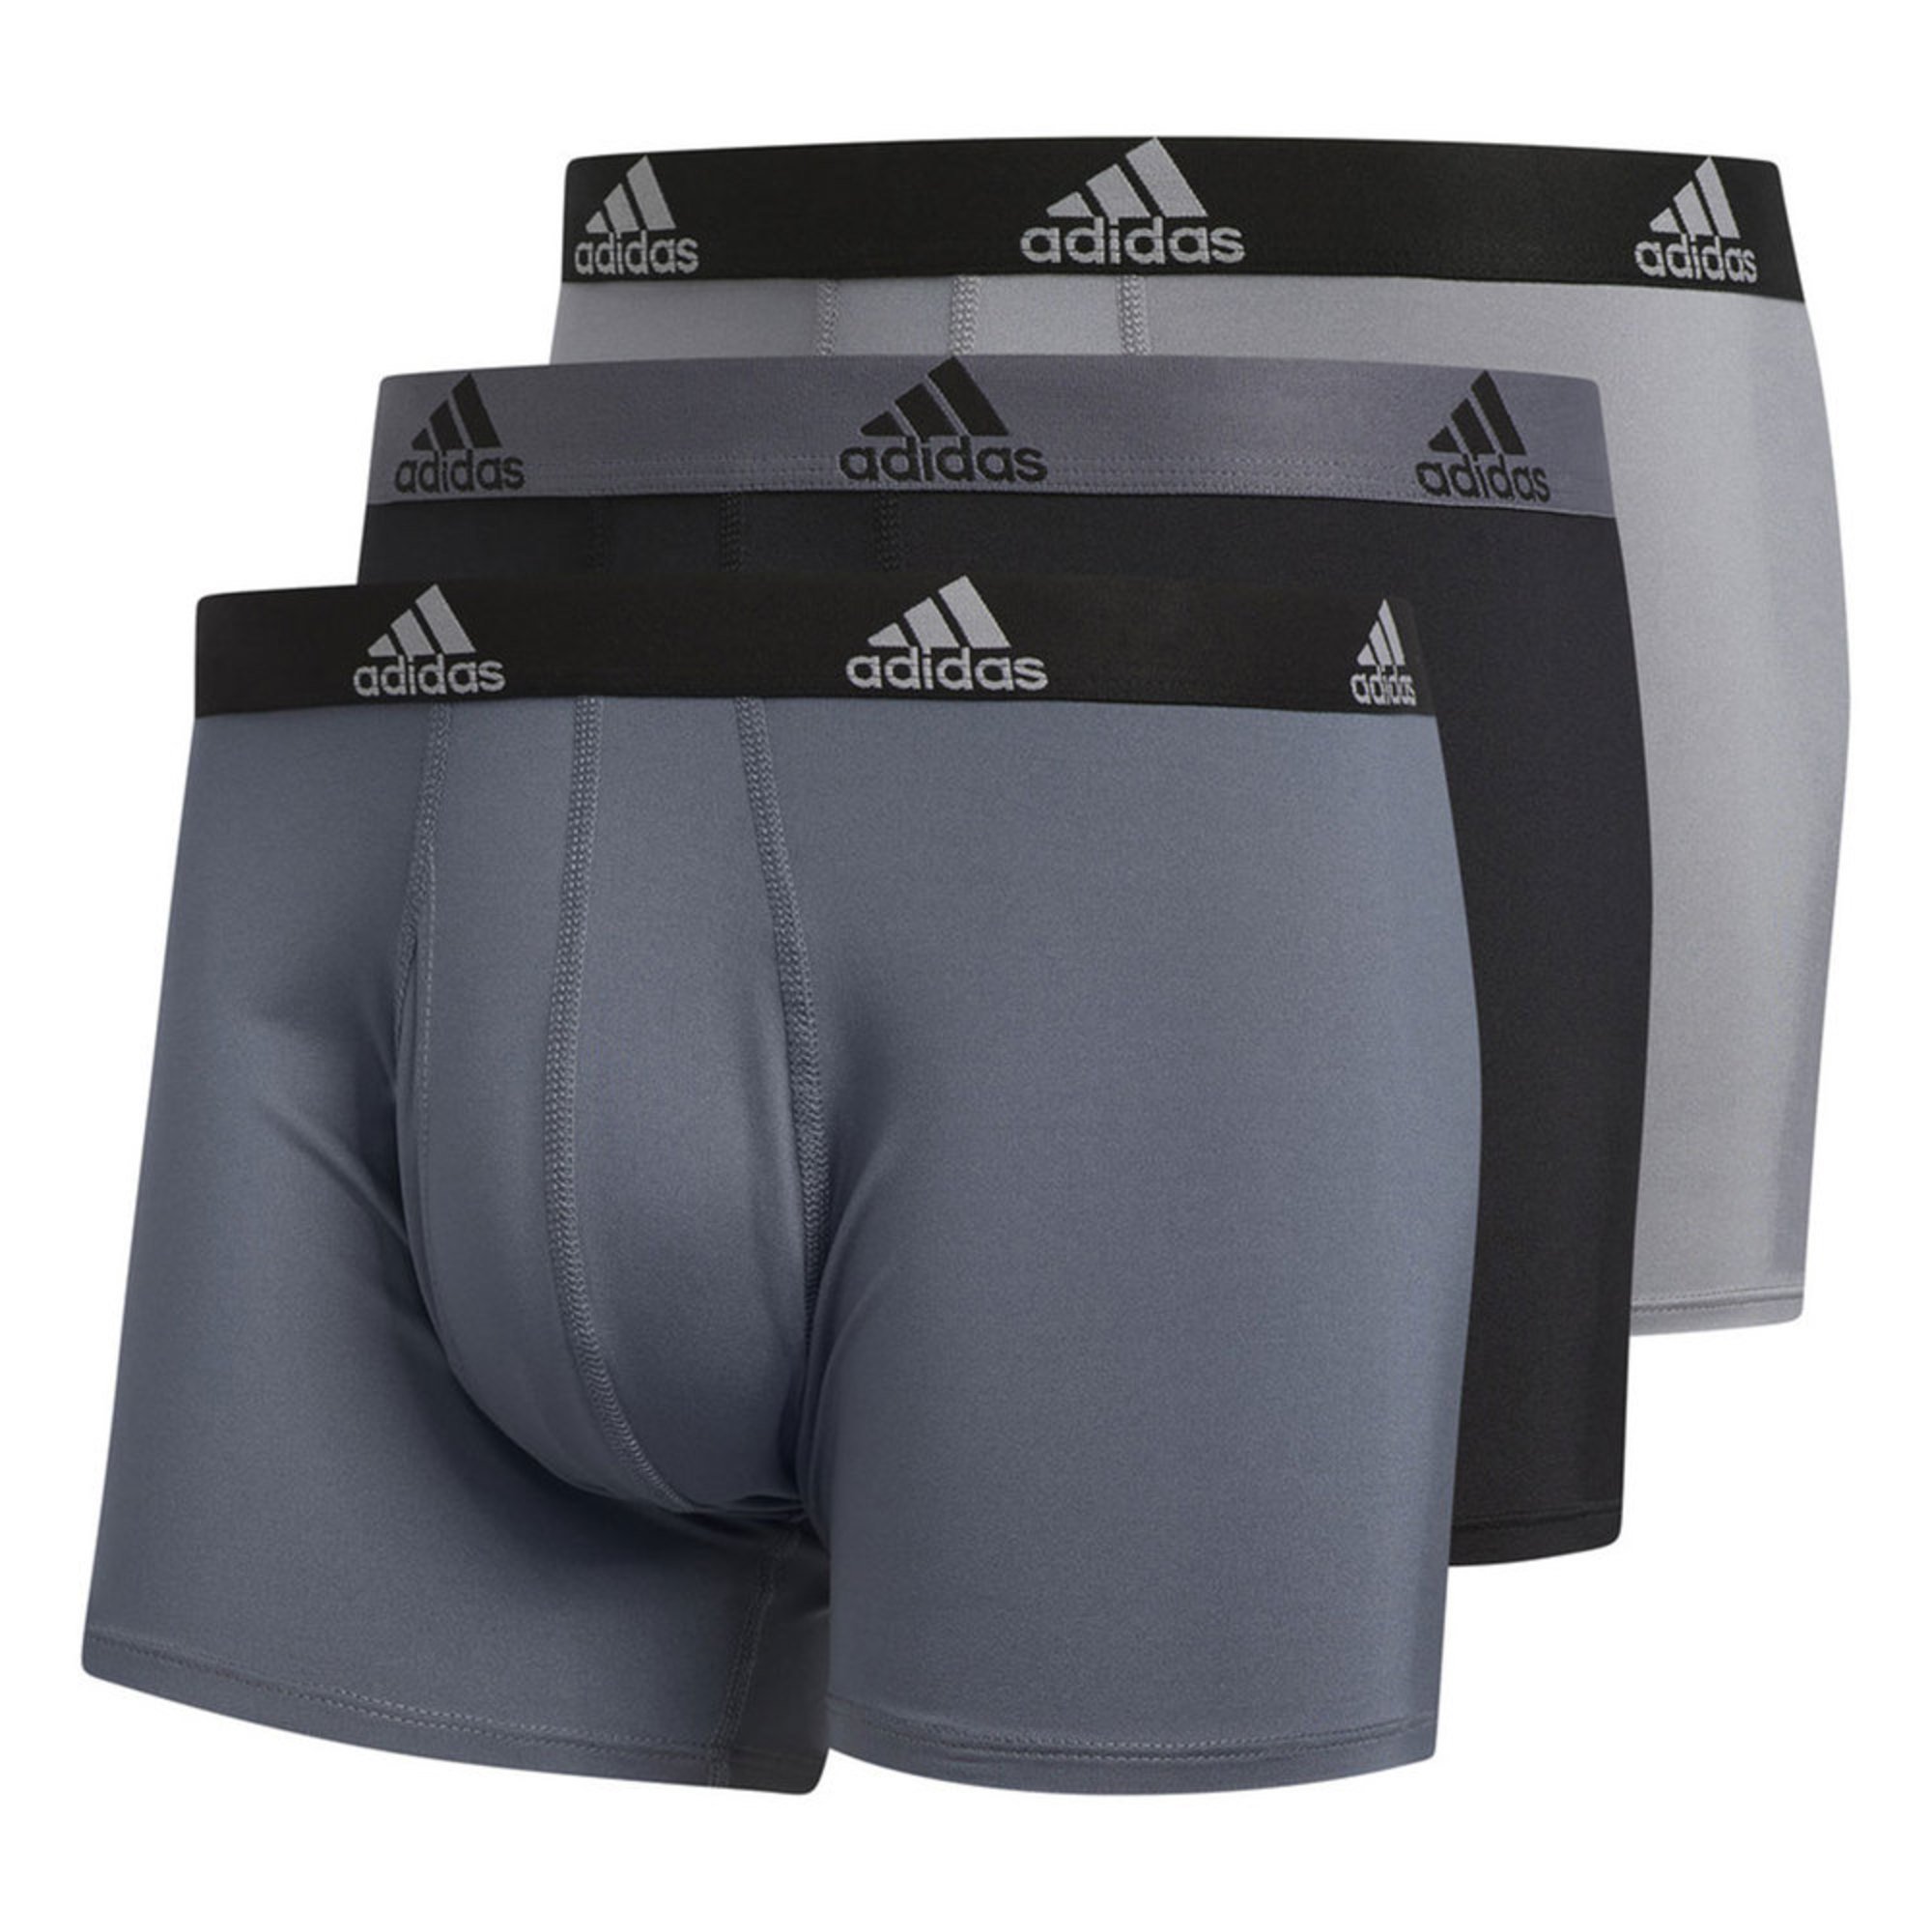 Adidas Men's Climalite 3-pack Trunk | Men's Underwear | Apparel - Shop ...